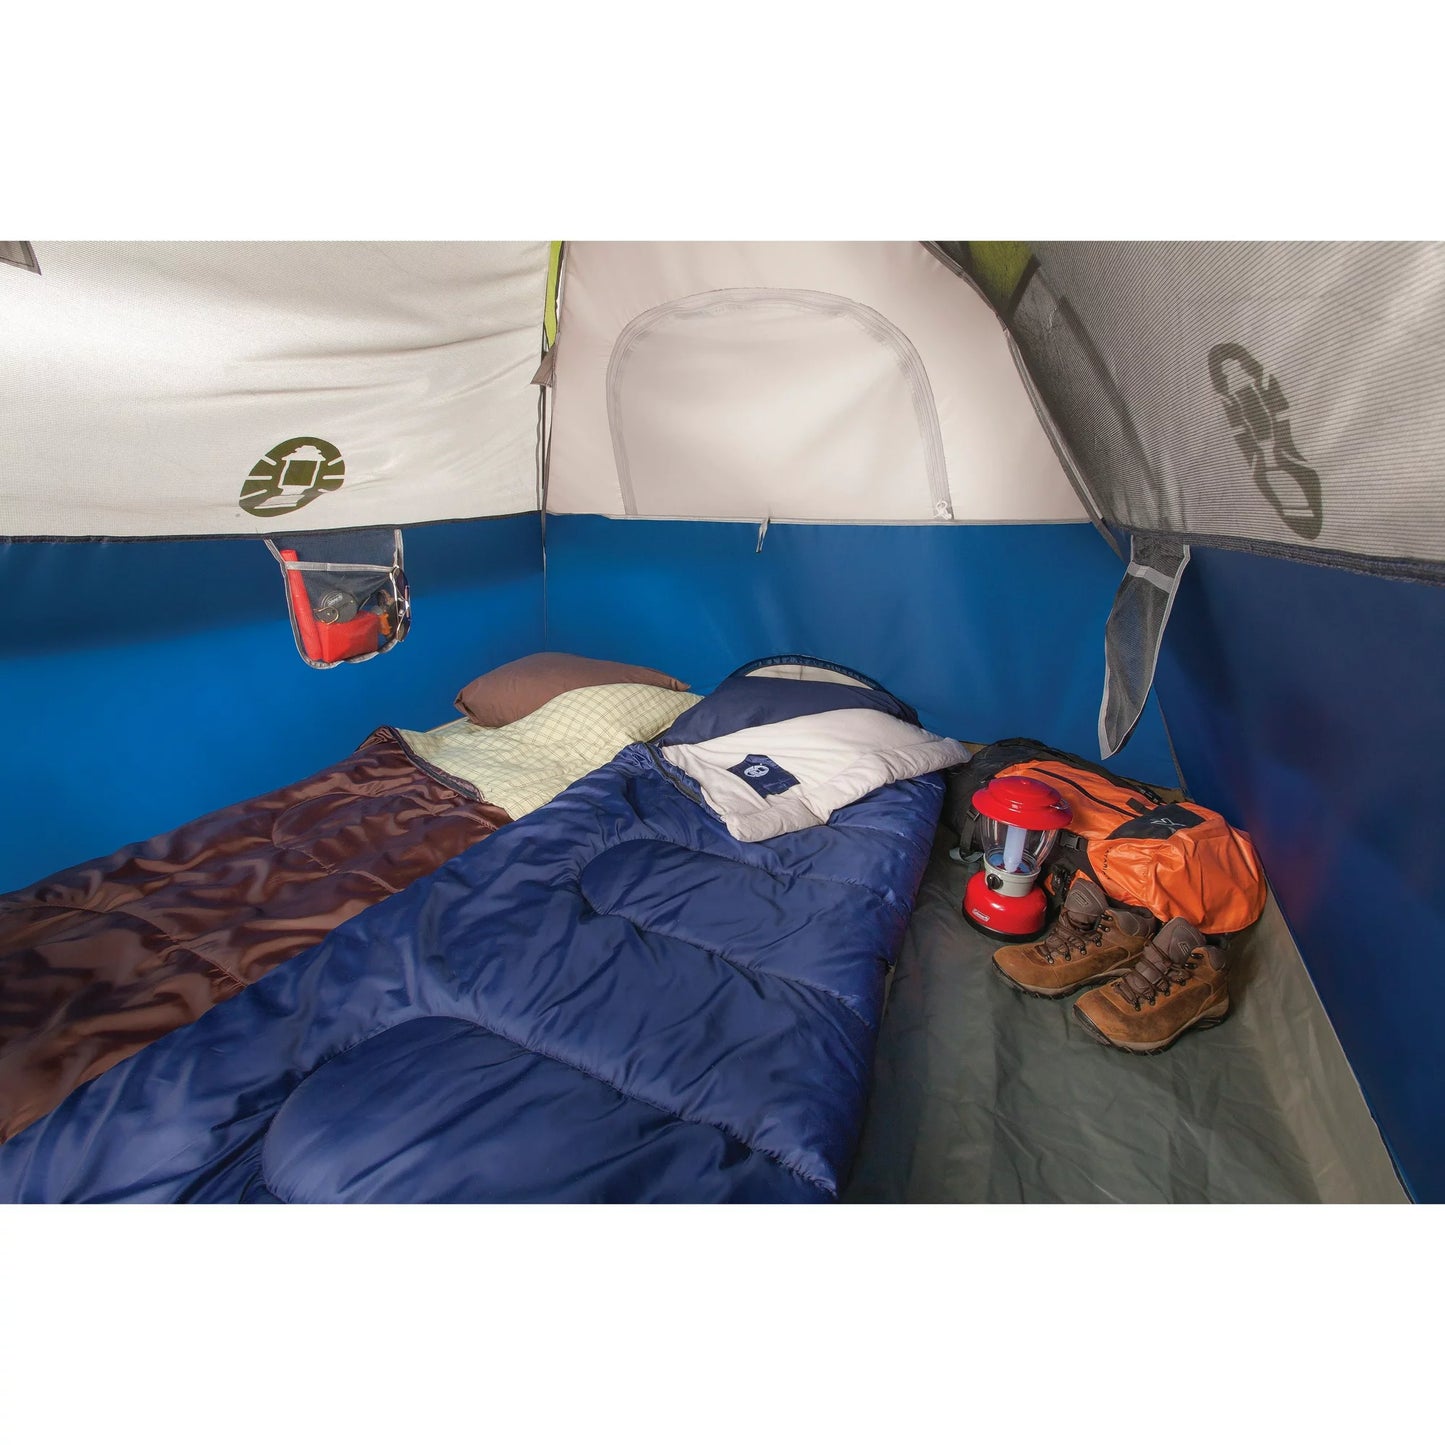 Sundome 3-Person Camping Tent